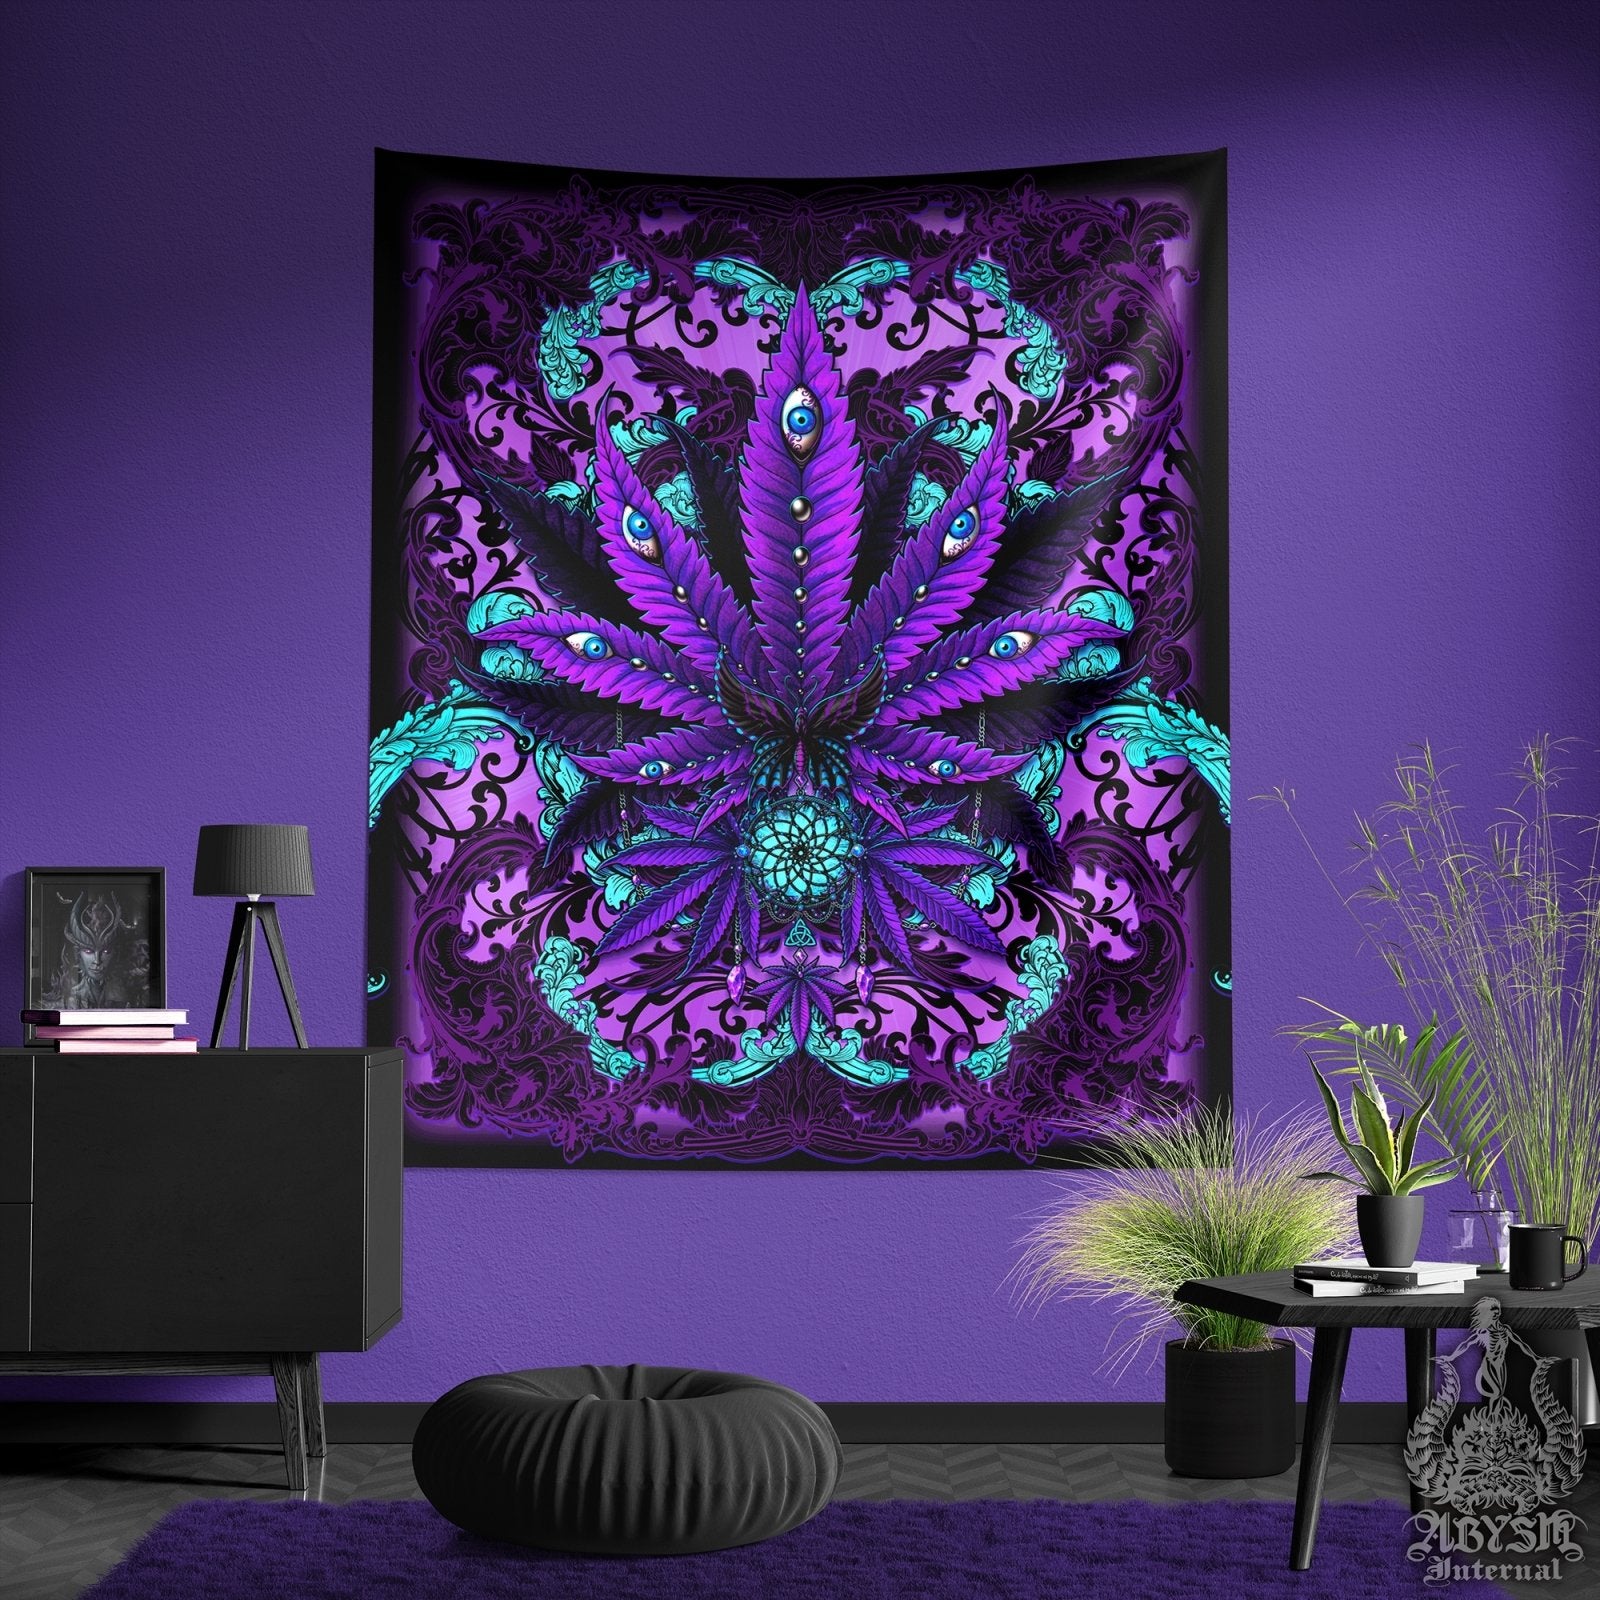 Gothic Weed Tapestry, Marijuana Shop Decor, Cannabis Wall Hanging, Pastel Goth Home Decor, Art Print, 420 Gift - Abysm Internal